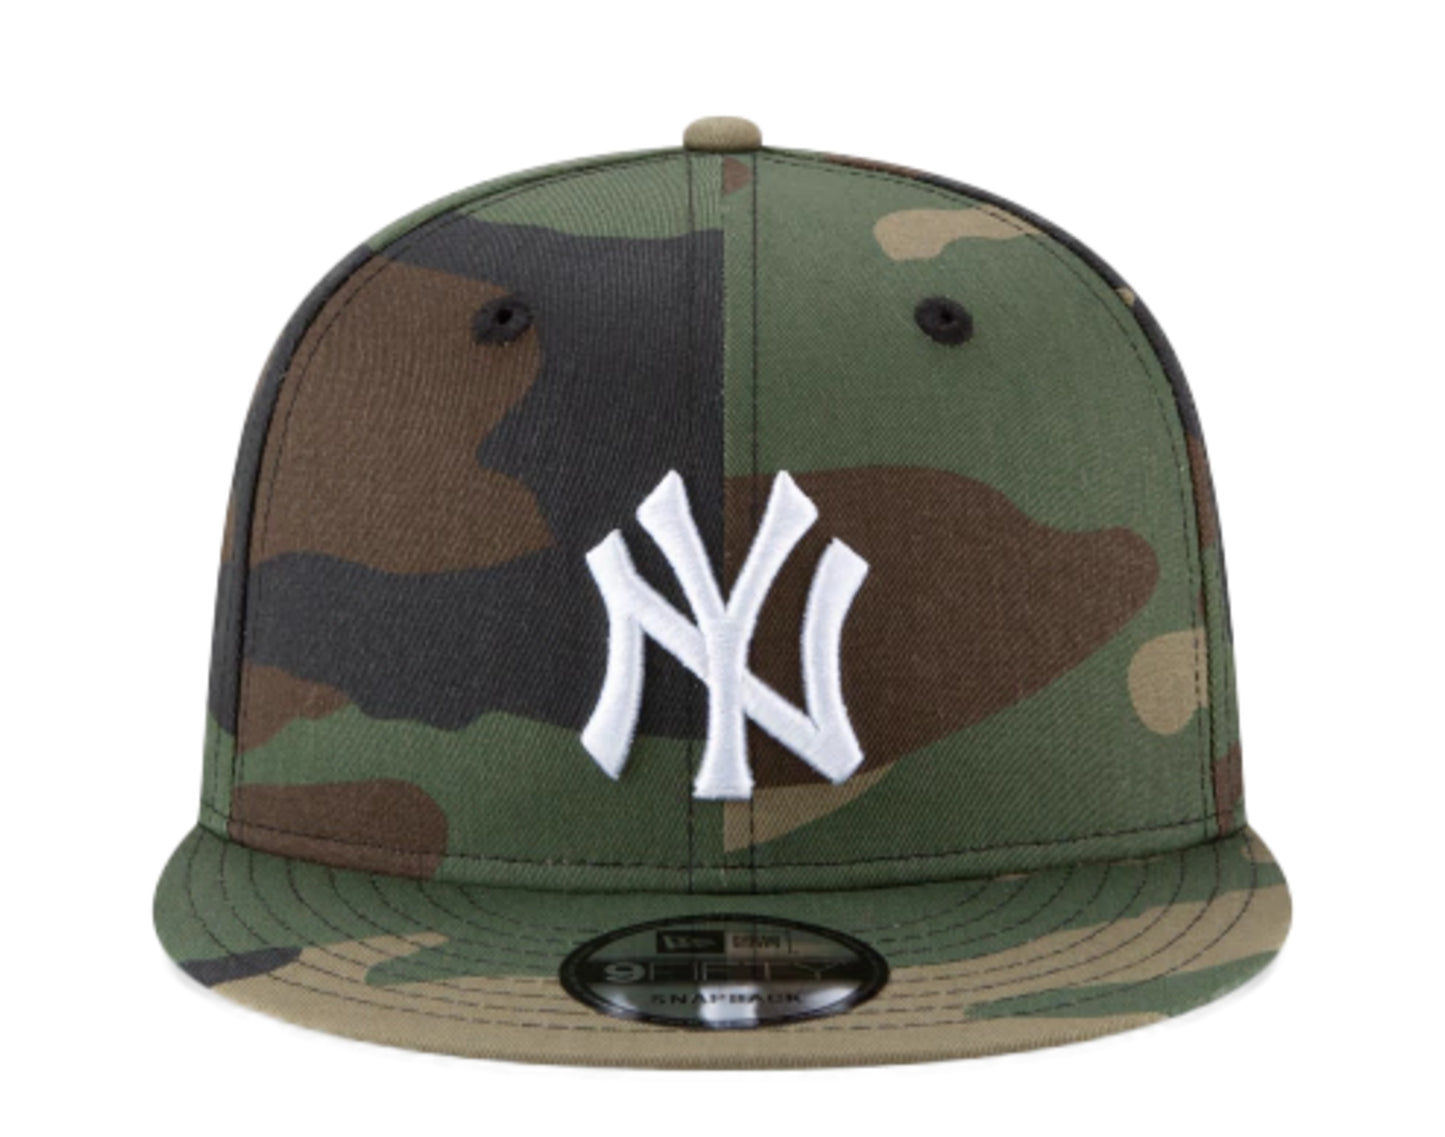 New Era 9Fifty MLB New York Yankees Green Camo Basic Snapback Hat 11941920